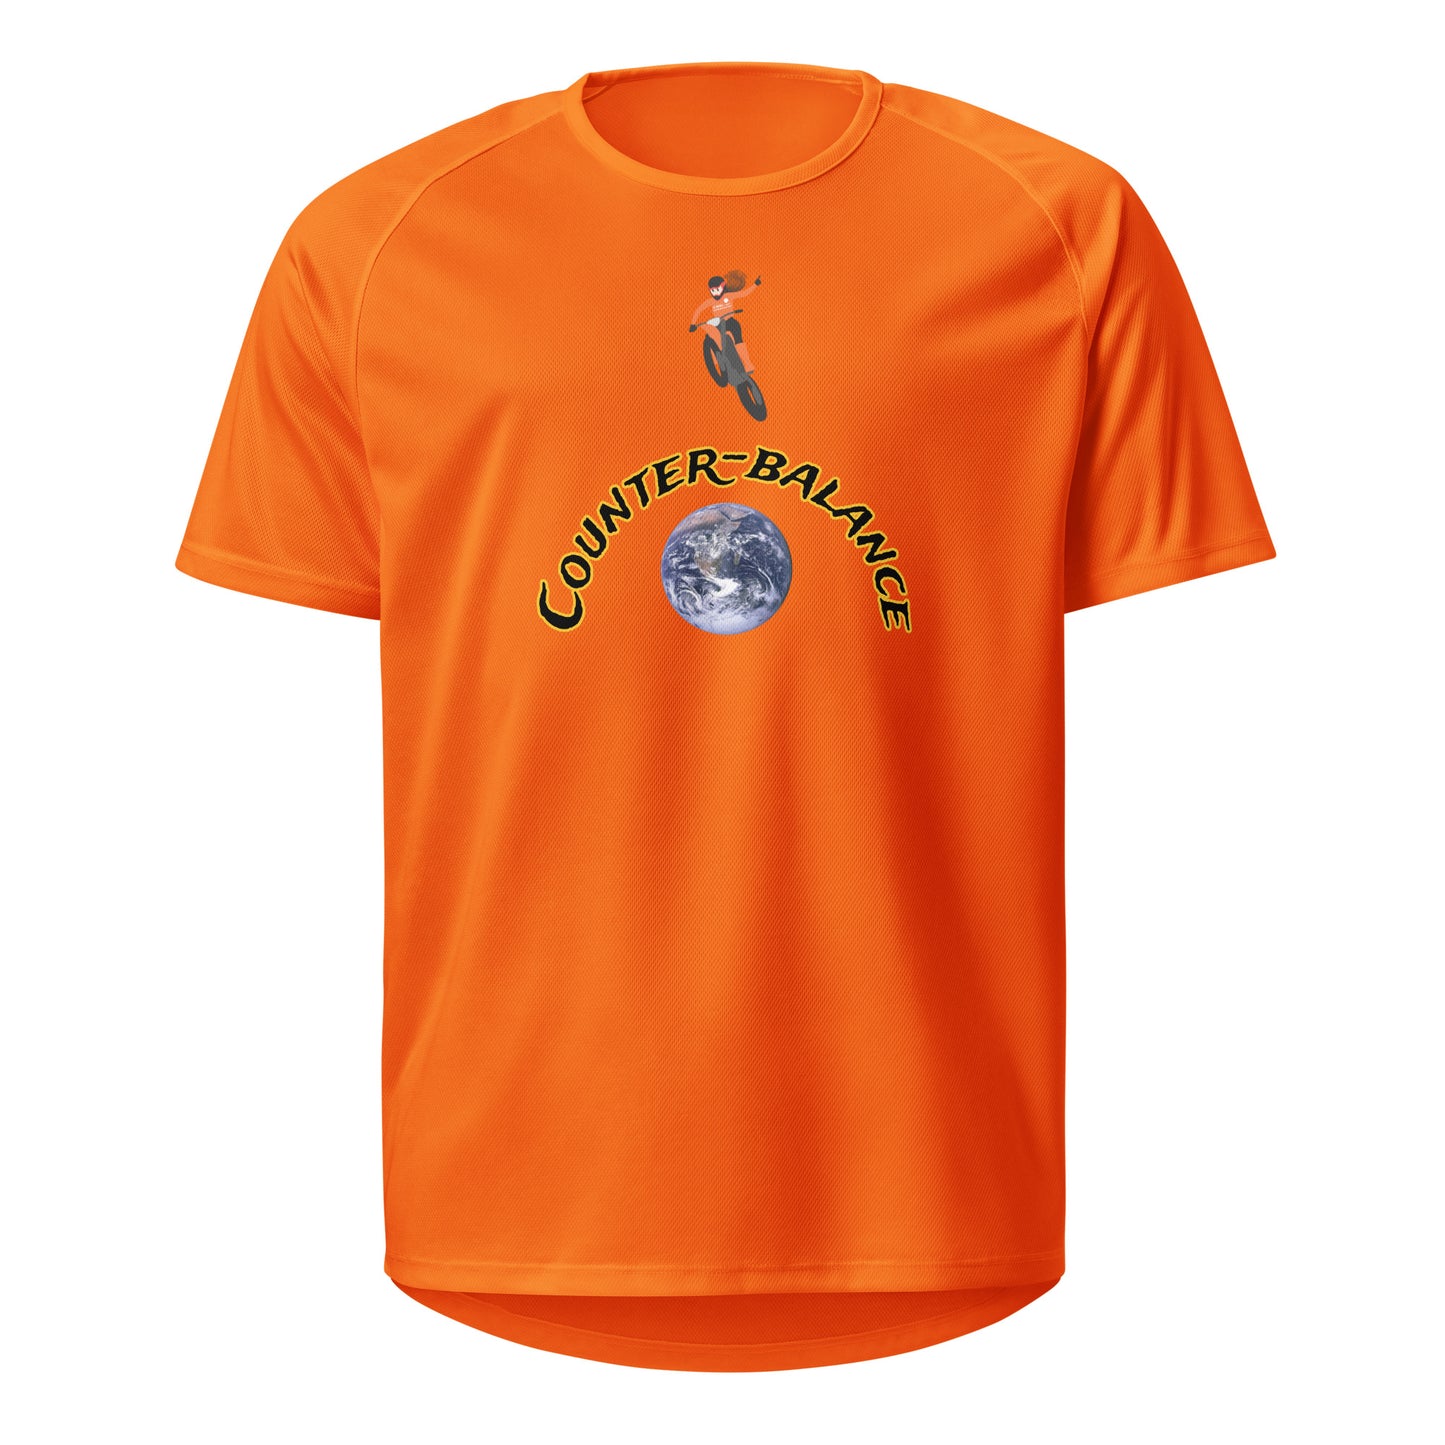 E122 - Sports/Breathable Fabric (Universal jump/woman : Orange)